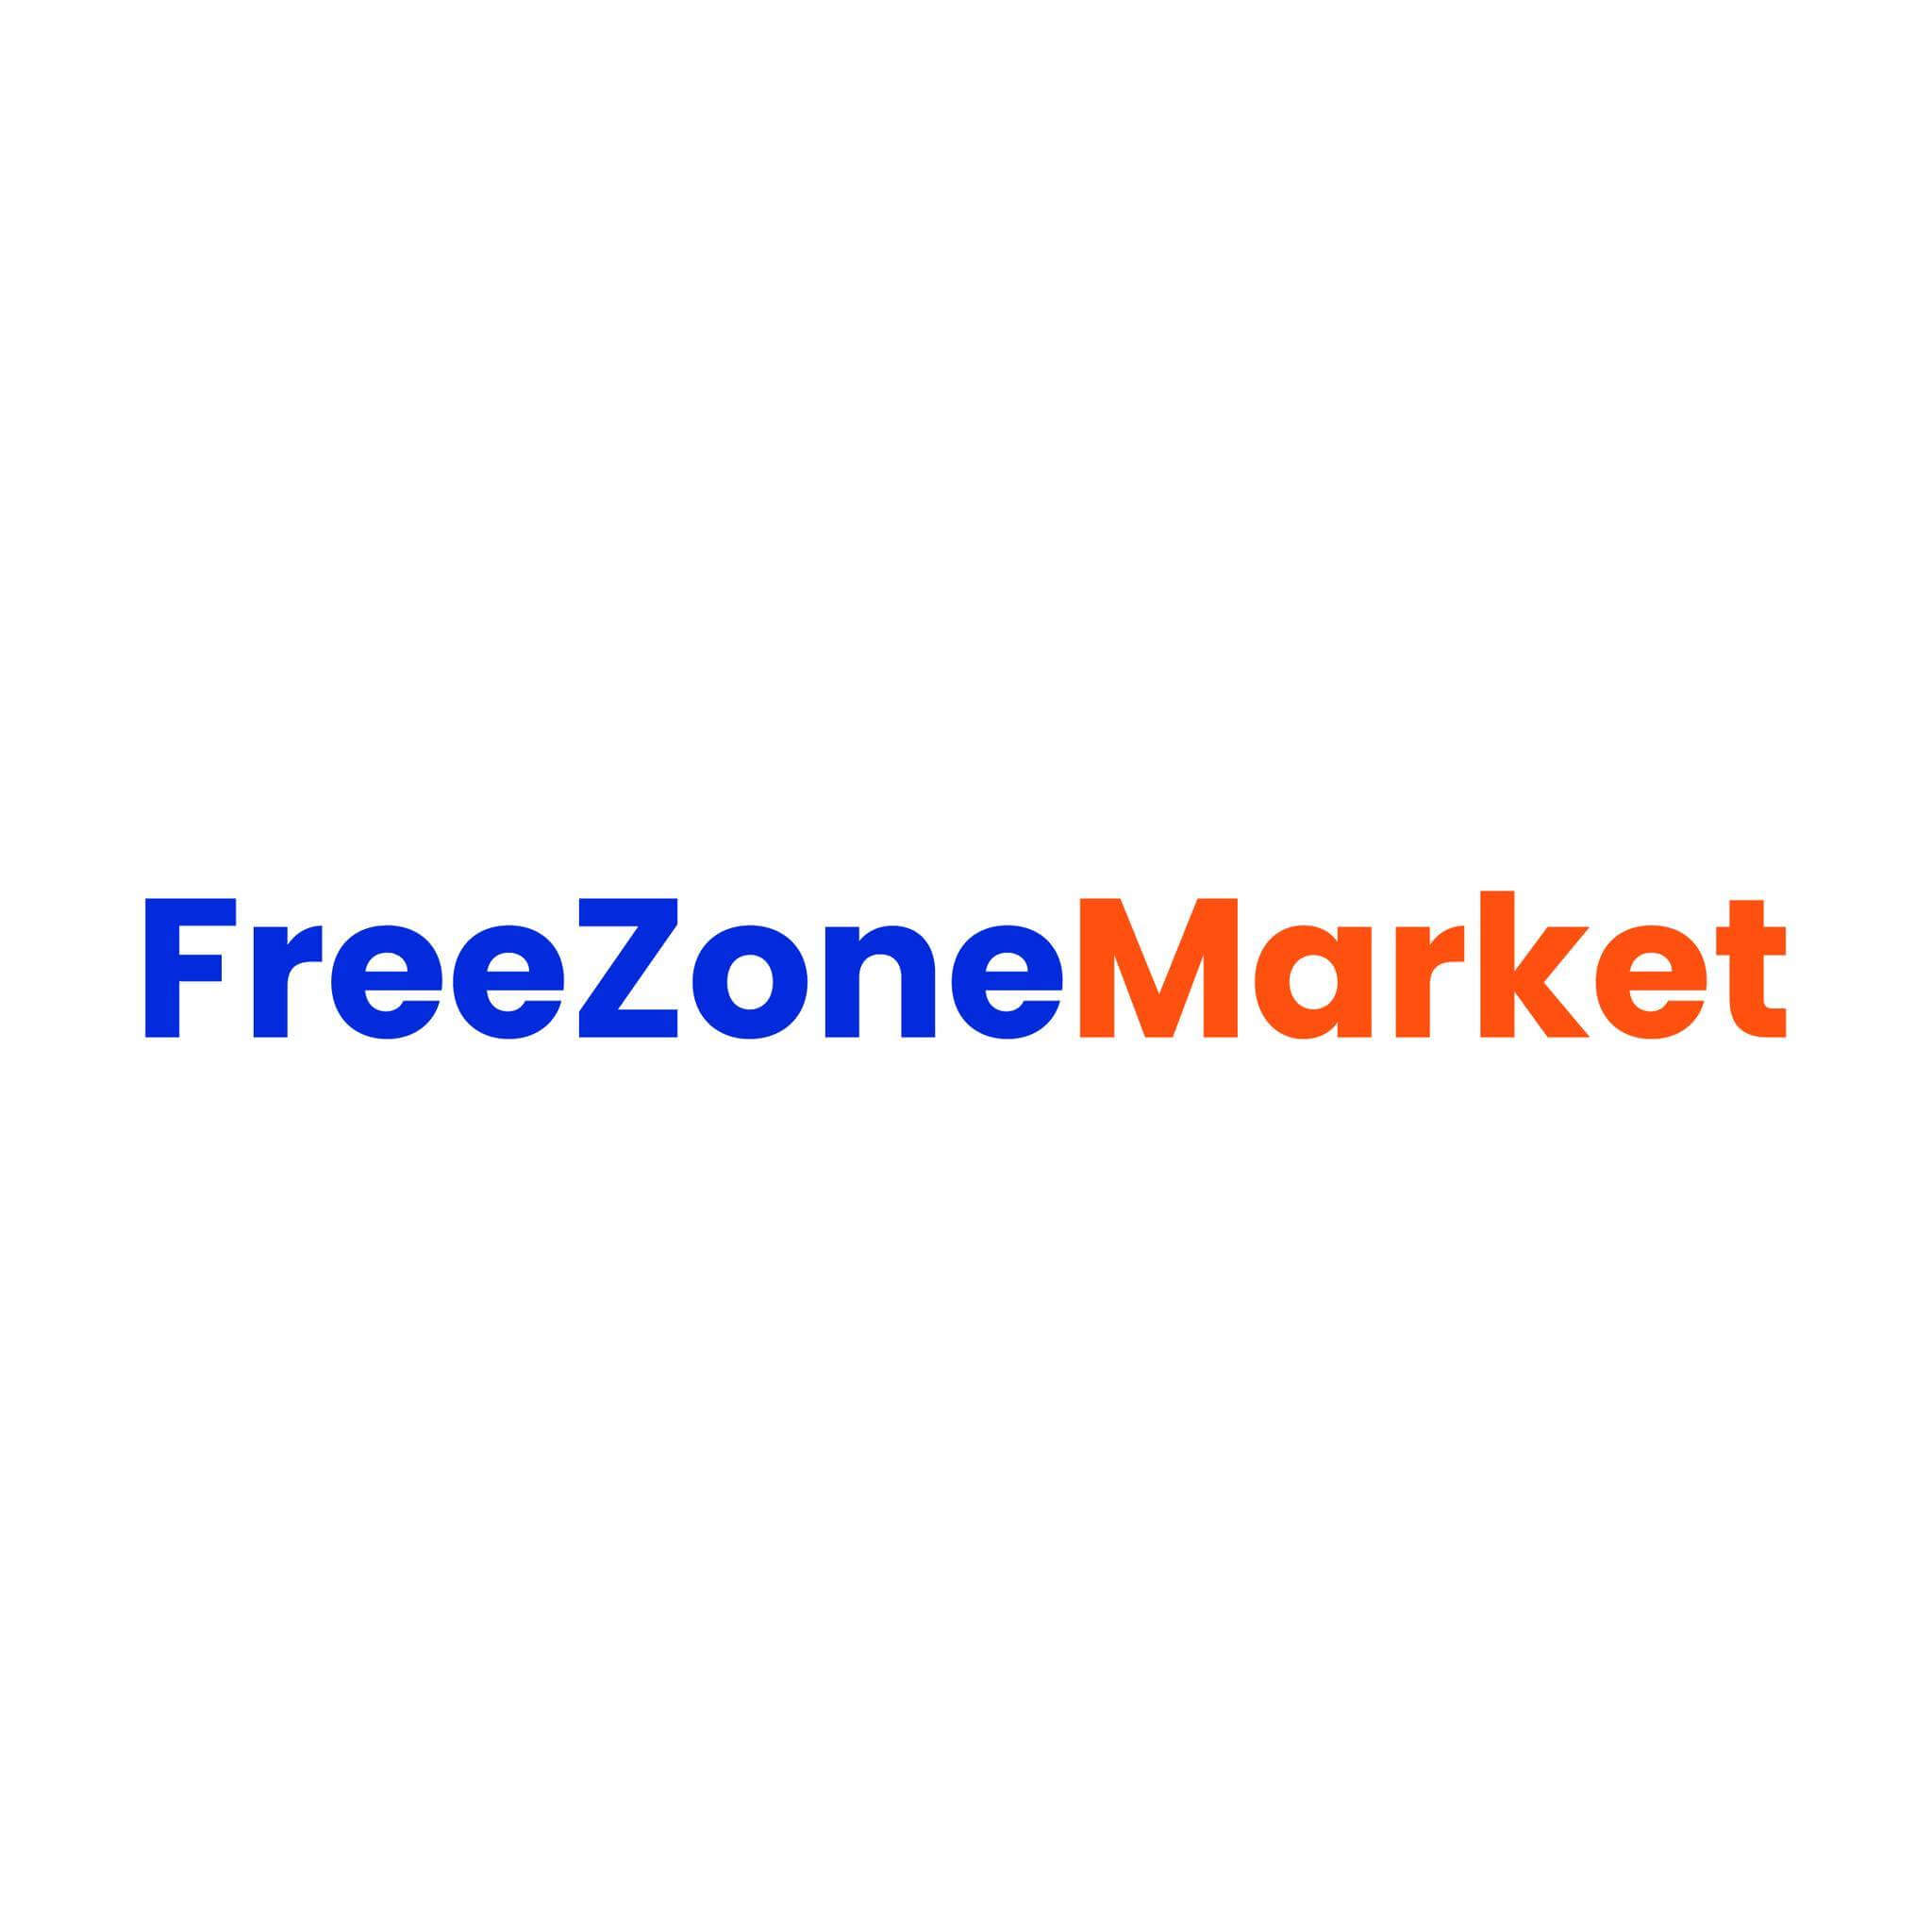 FreeZoneMarket by FZM Solutions DMCC